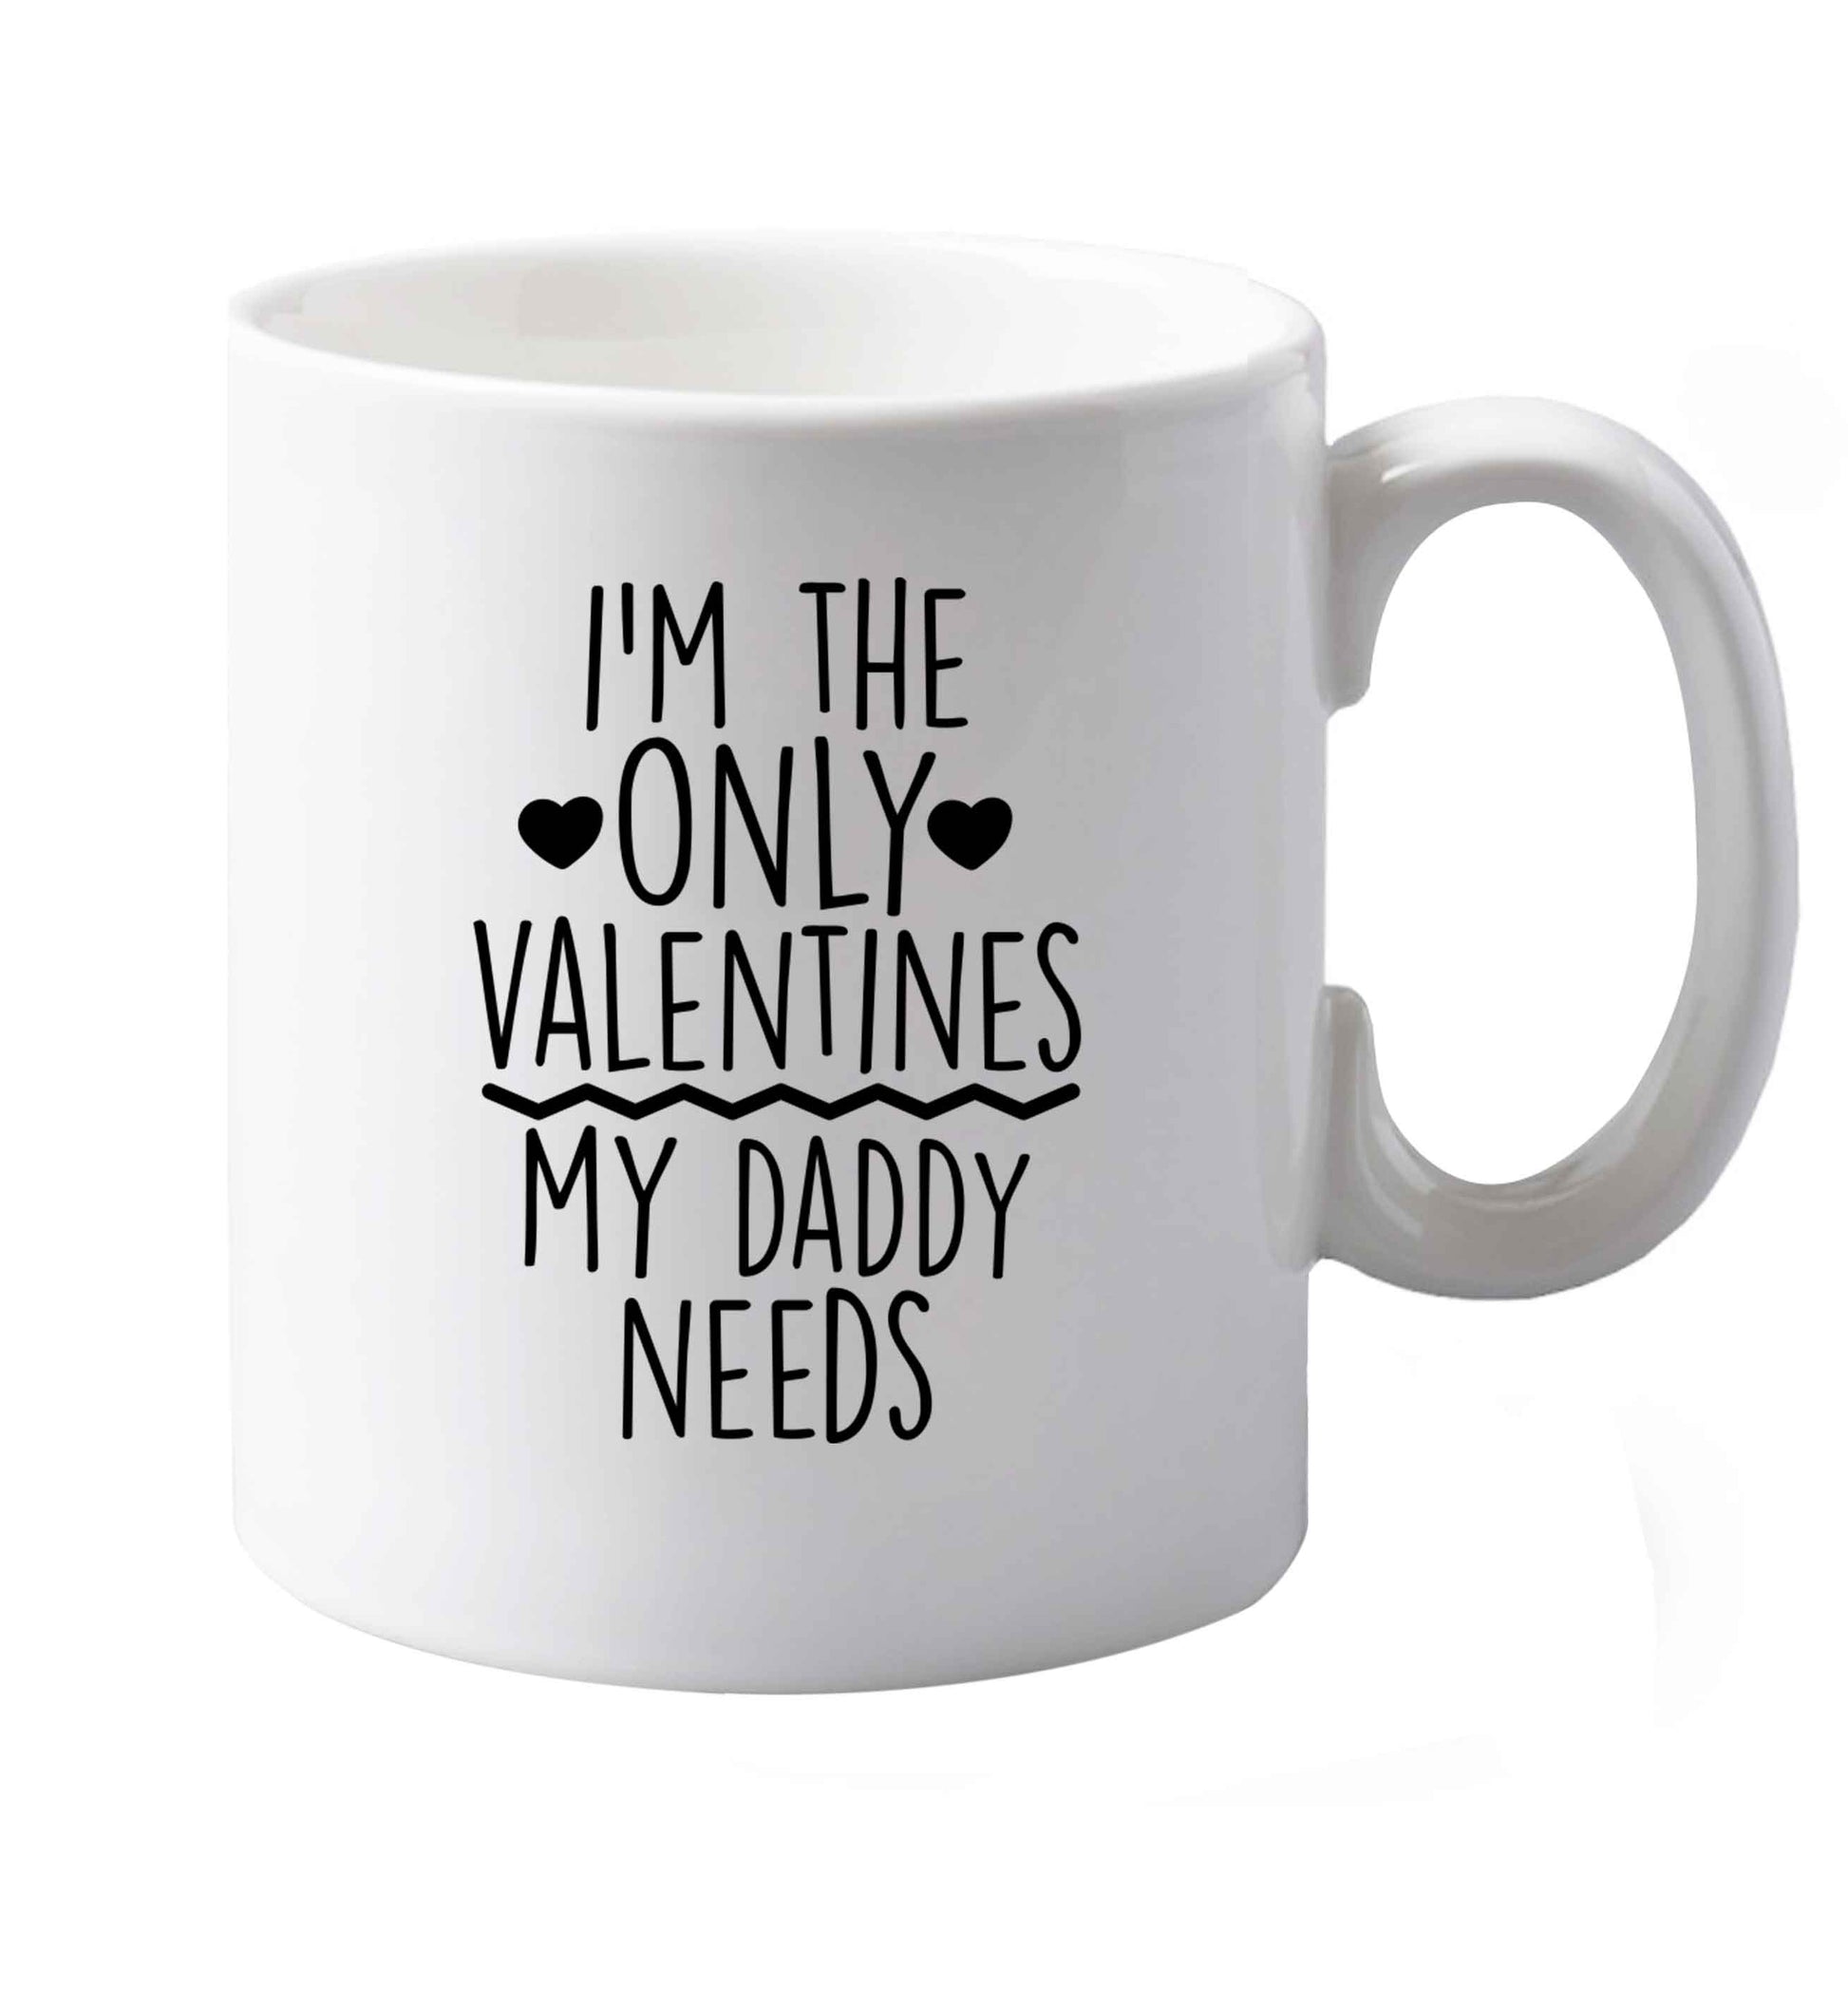 10 oz I'm the only valentines my daddy needs ceramic mug both sides